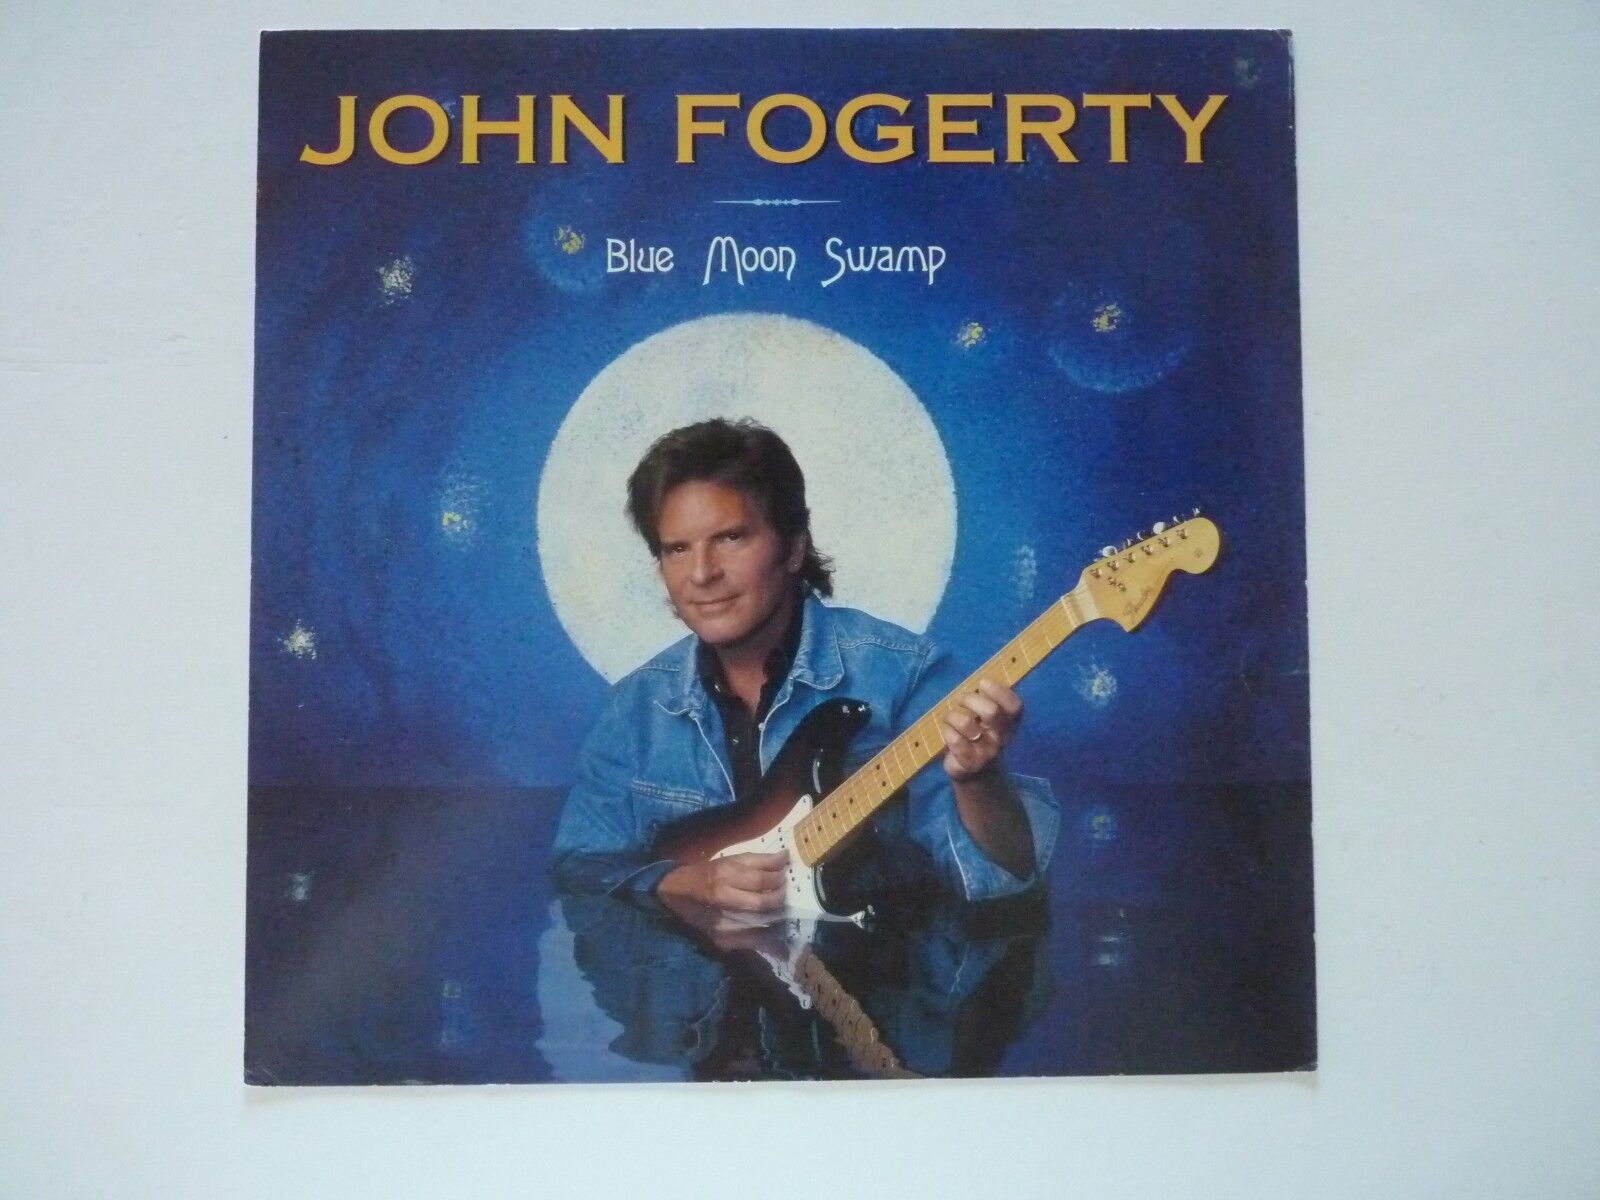 John Fogerty Blue Moon Swamp LP Record Photo Poster painting Flat 12x12 Poster